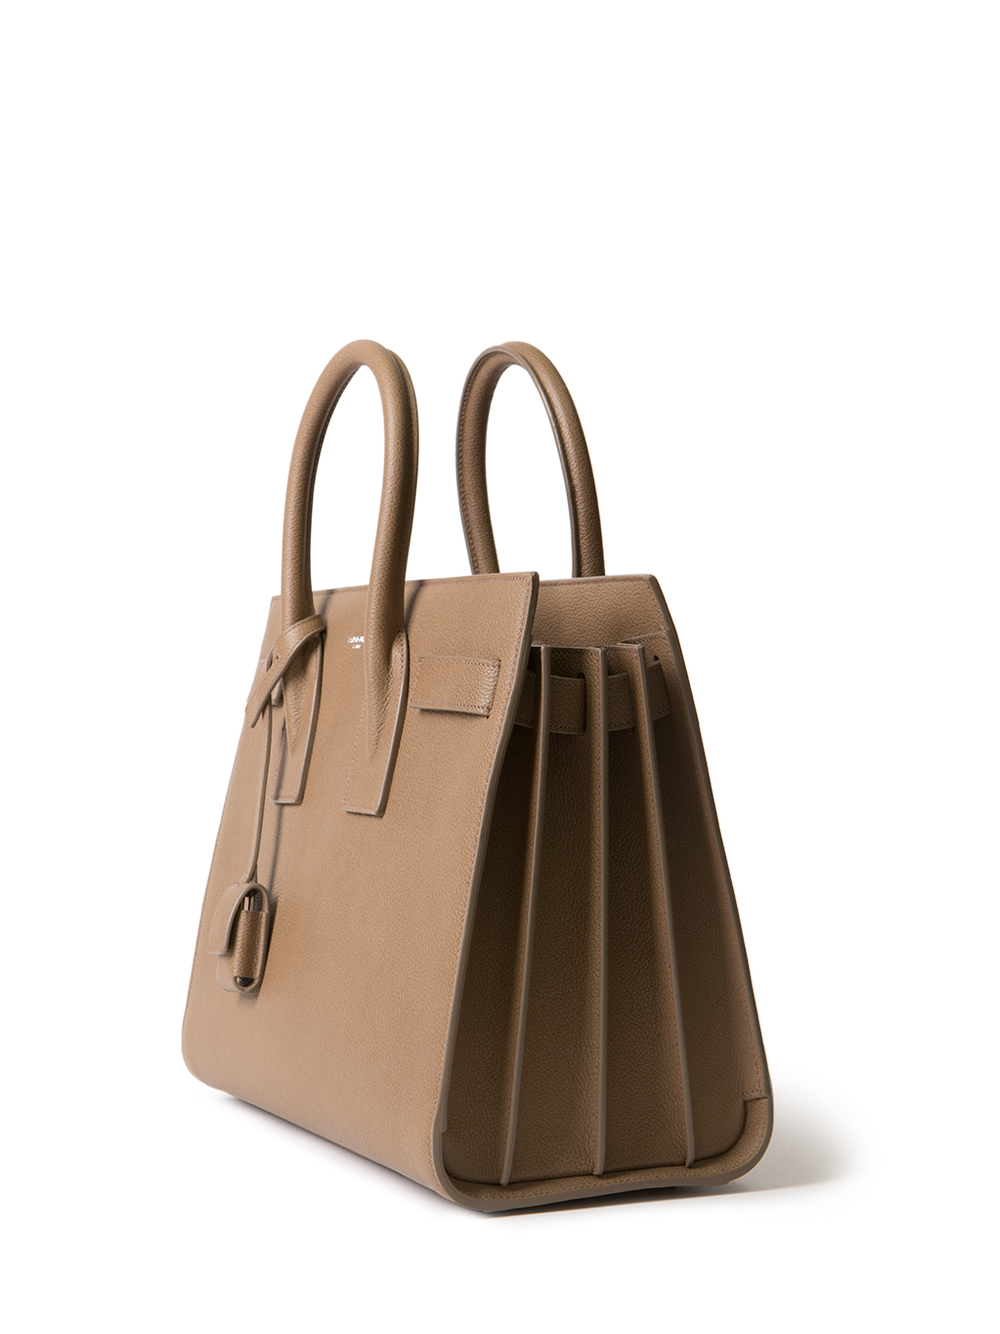 ysl clutch bag price - Saint laurent Sac De Jour Grain Leather Bag in Beige | Lyst